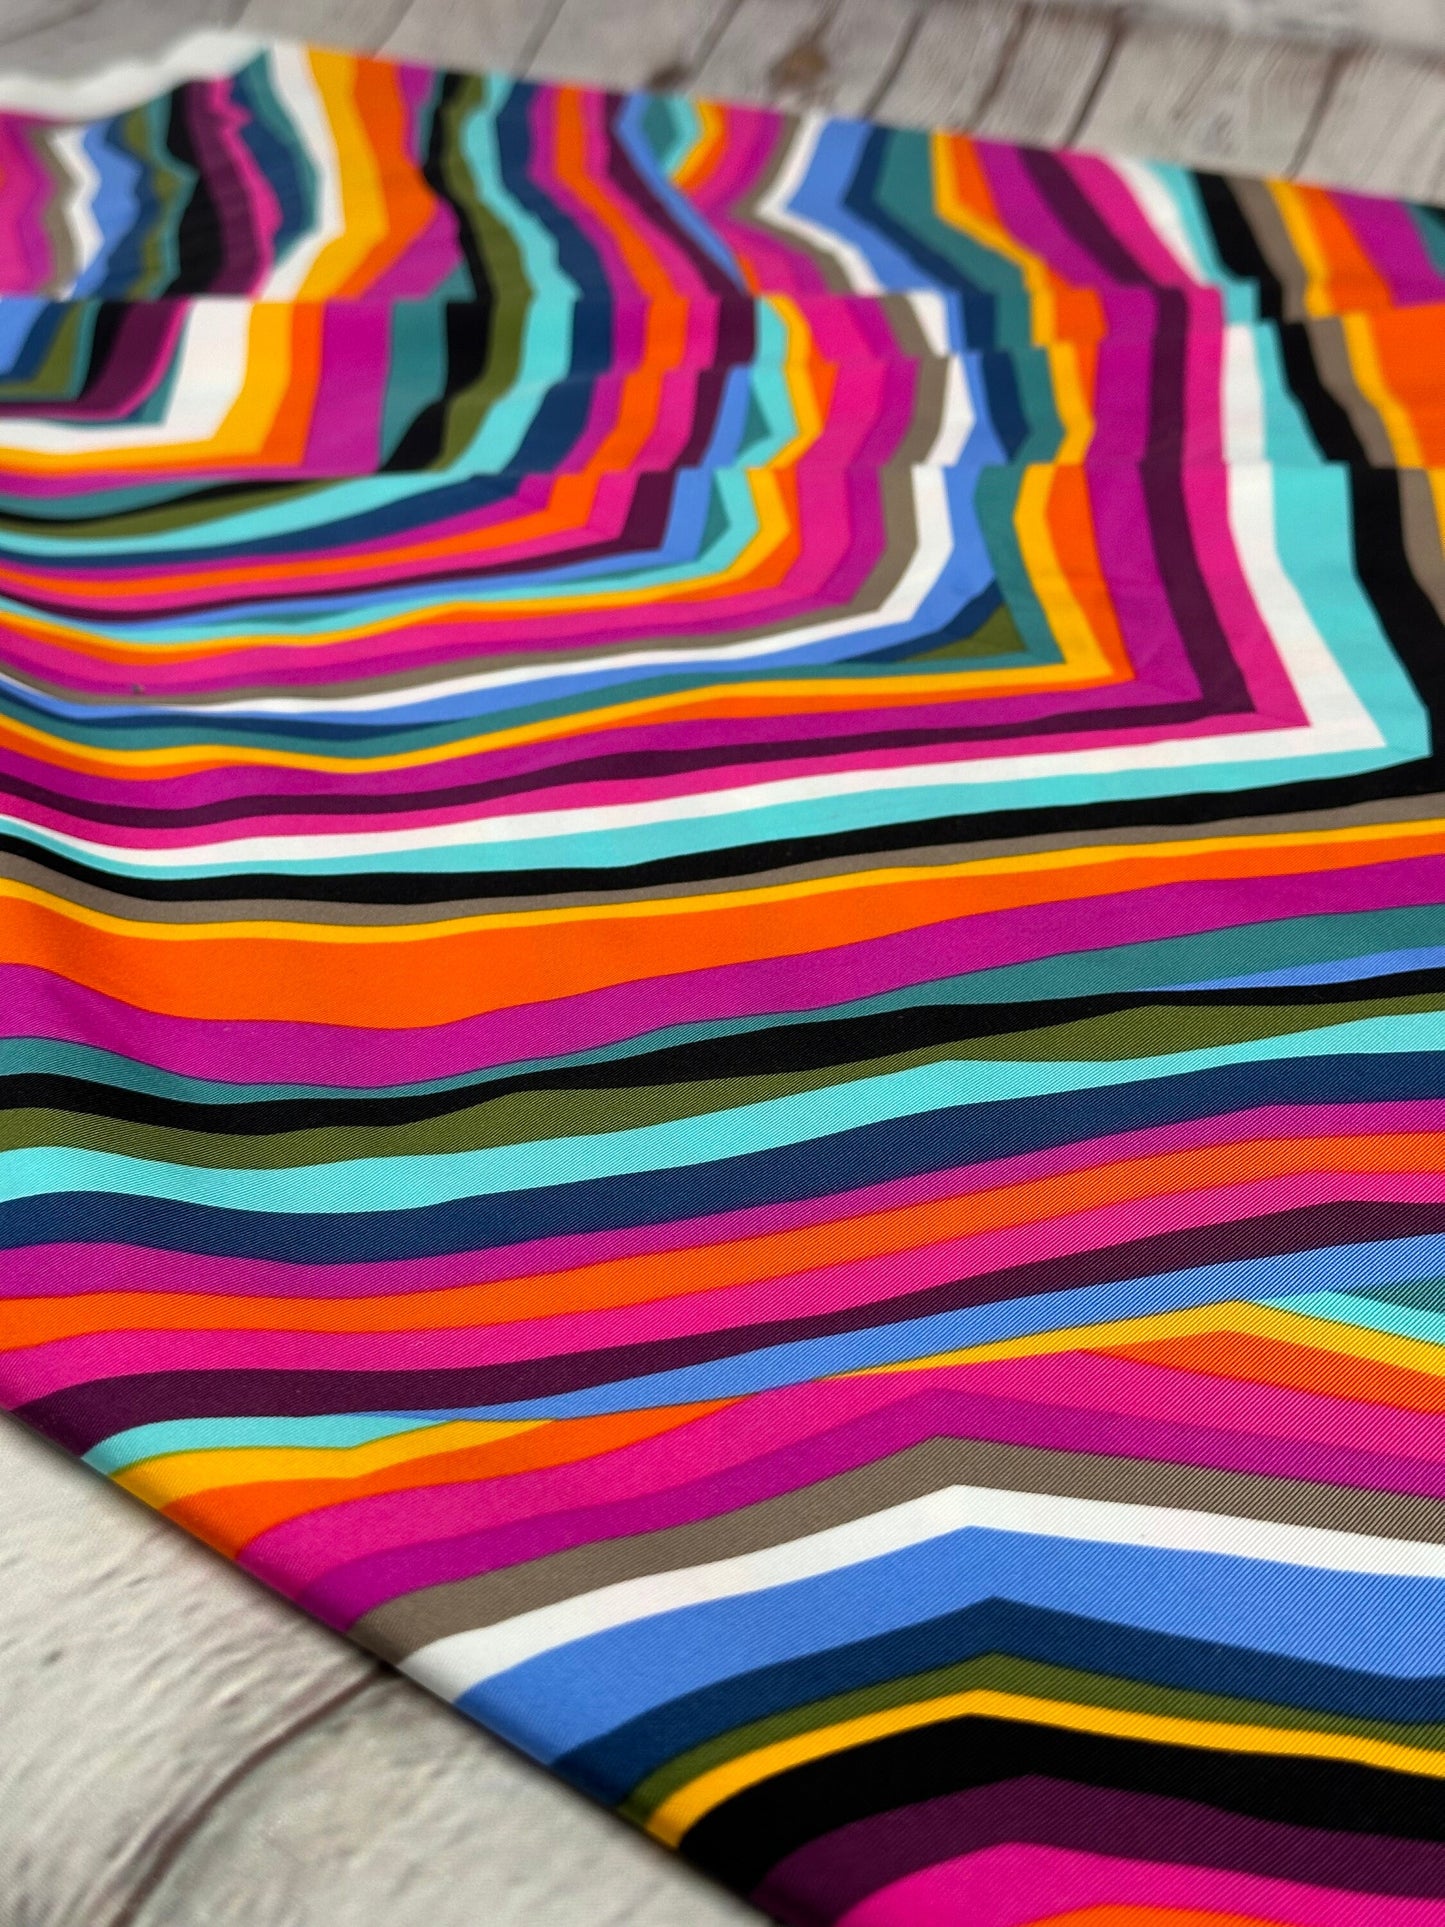 4 Way Stretch Print Nylon Spandex Fabric By The Yard Tricot Swim Wear Bikini Active Wear Multi Color Cheveron Stripe Geometric